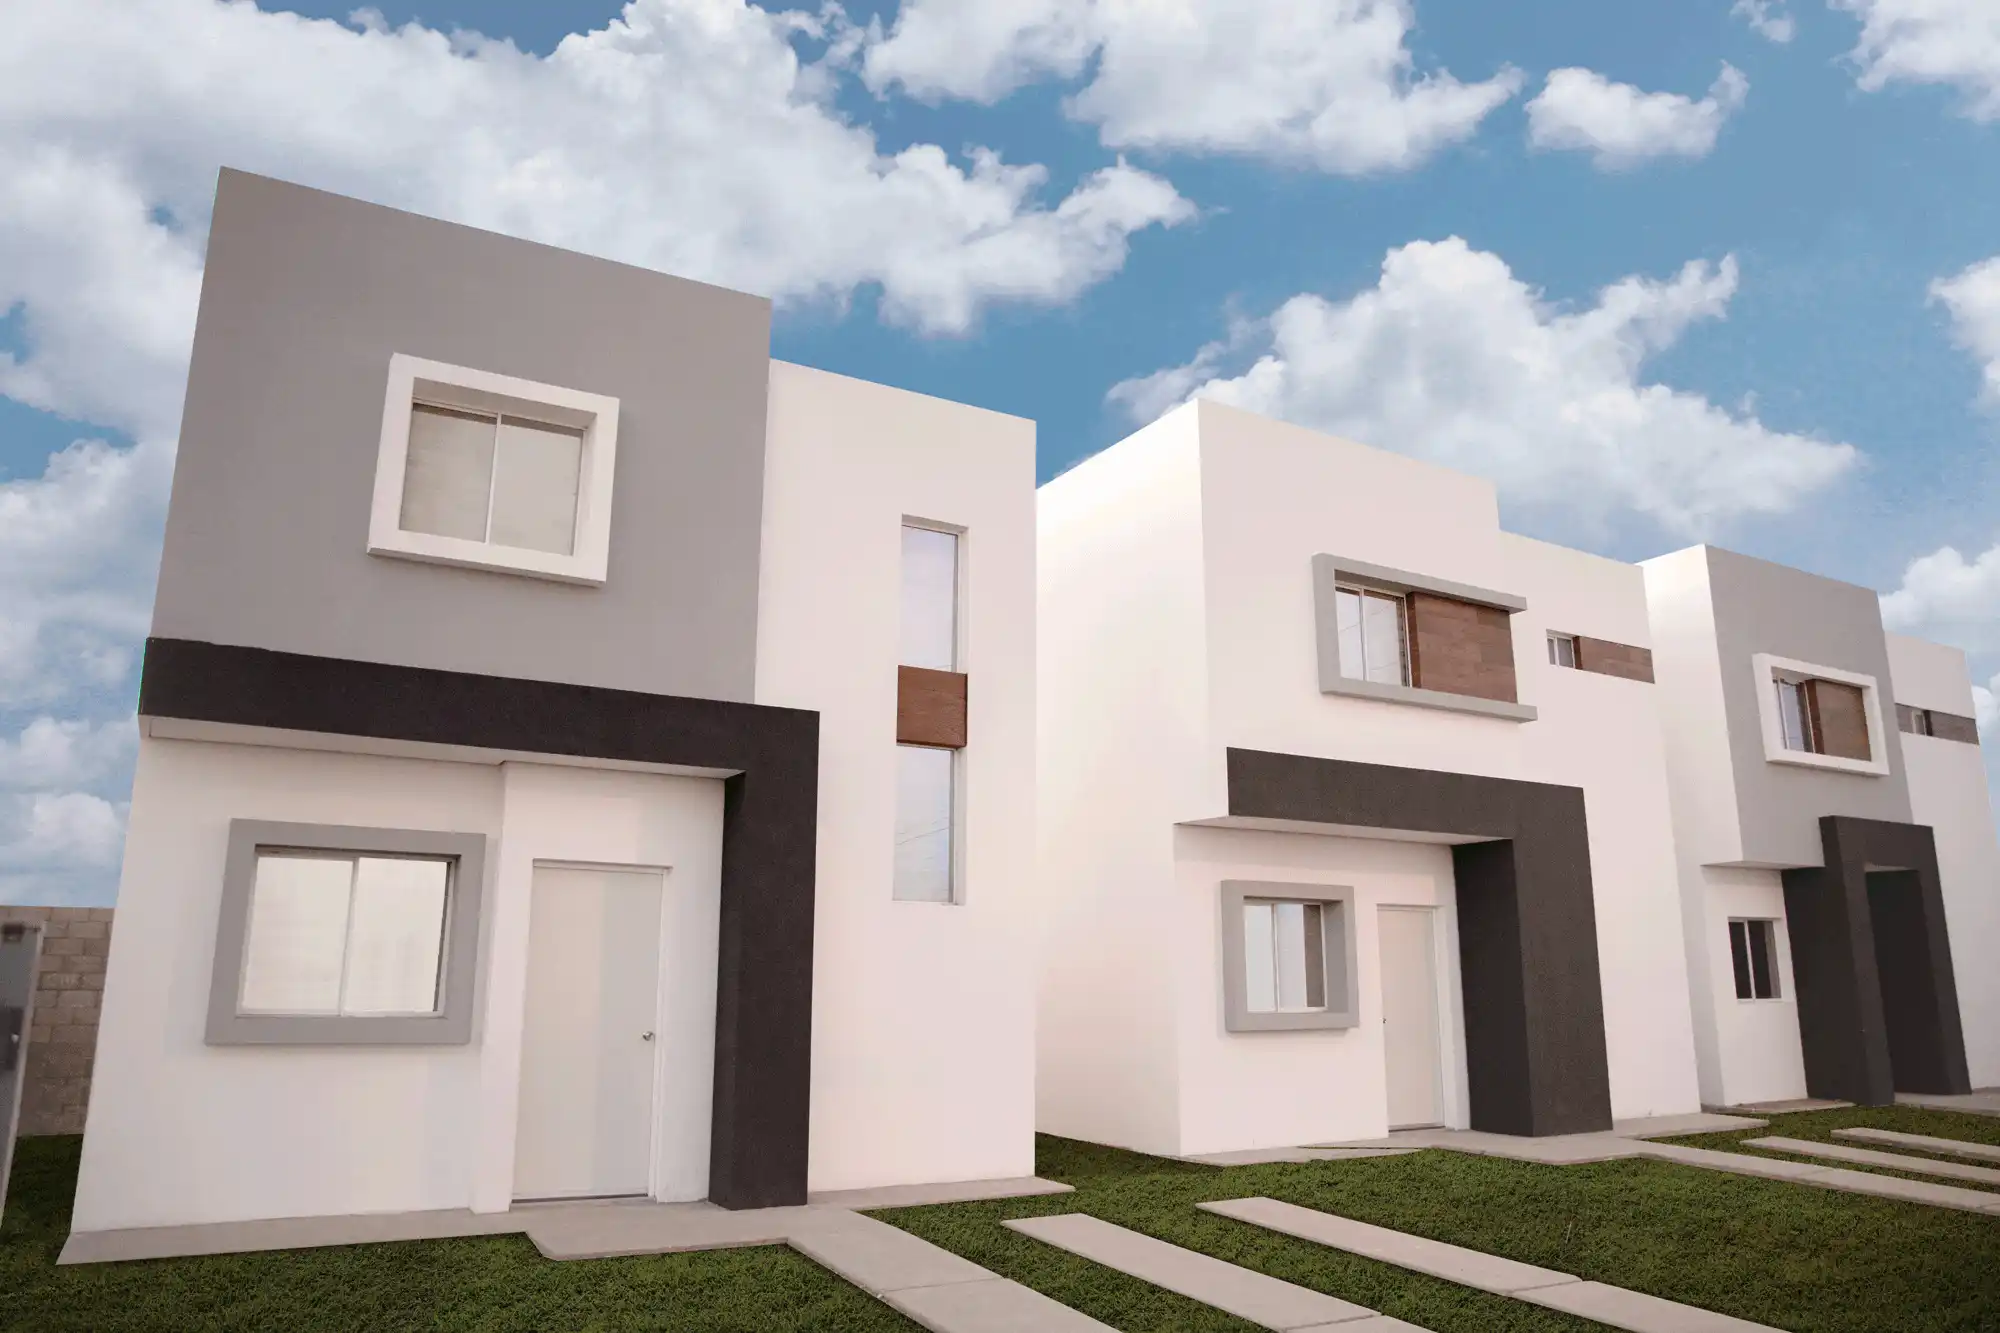 Fila de casas modernas de dos pisos con fachadas en colores neutros, como blanco, gris y negro.